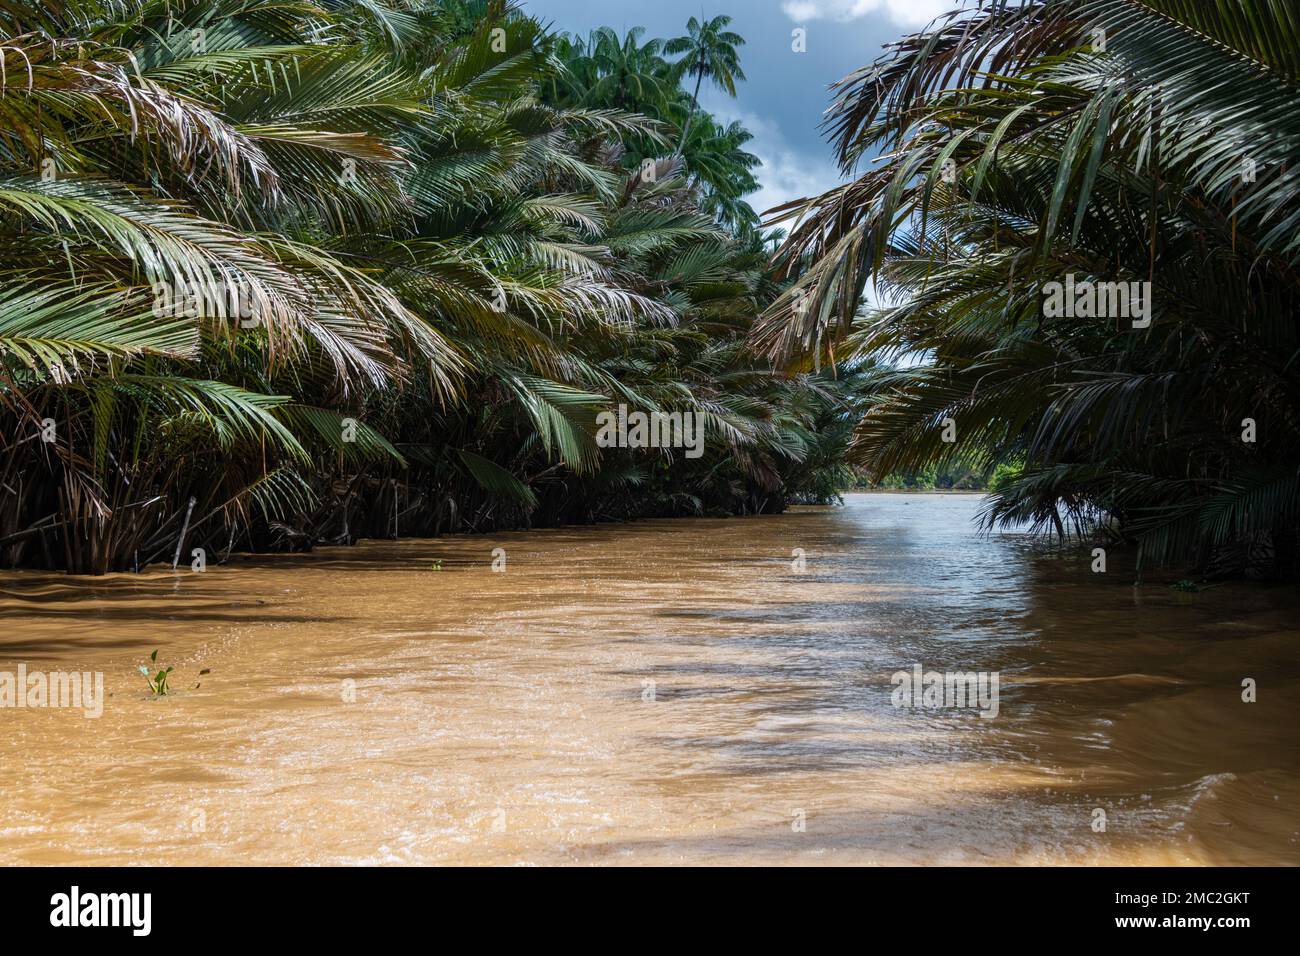 The Kinabatangan River, Borneo, Malaysia Stock Photo